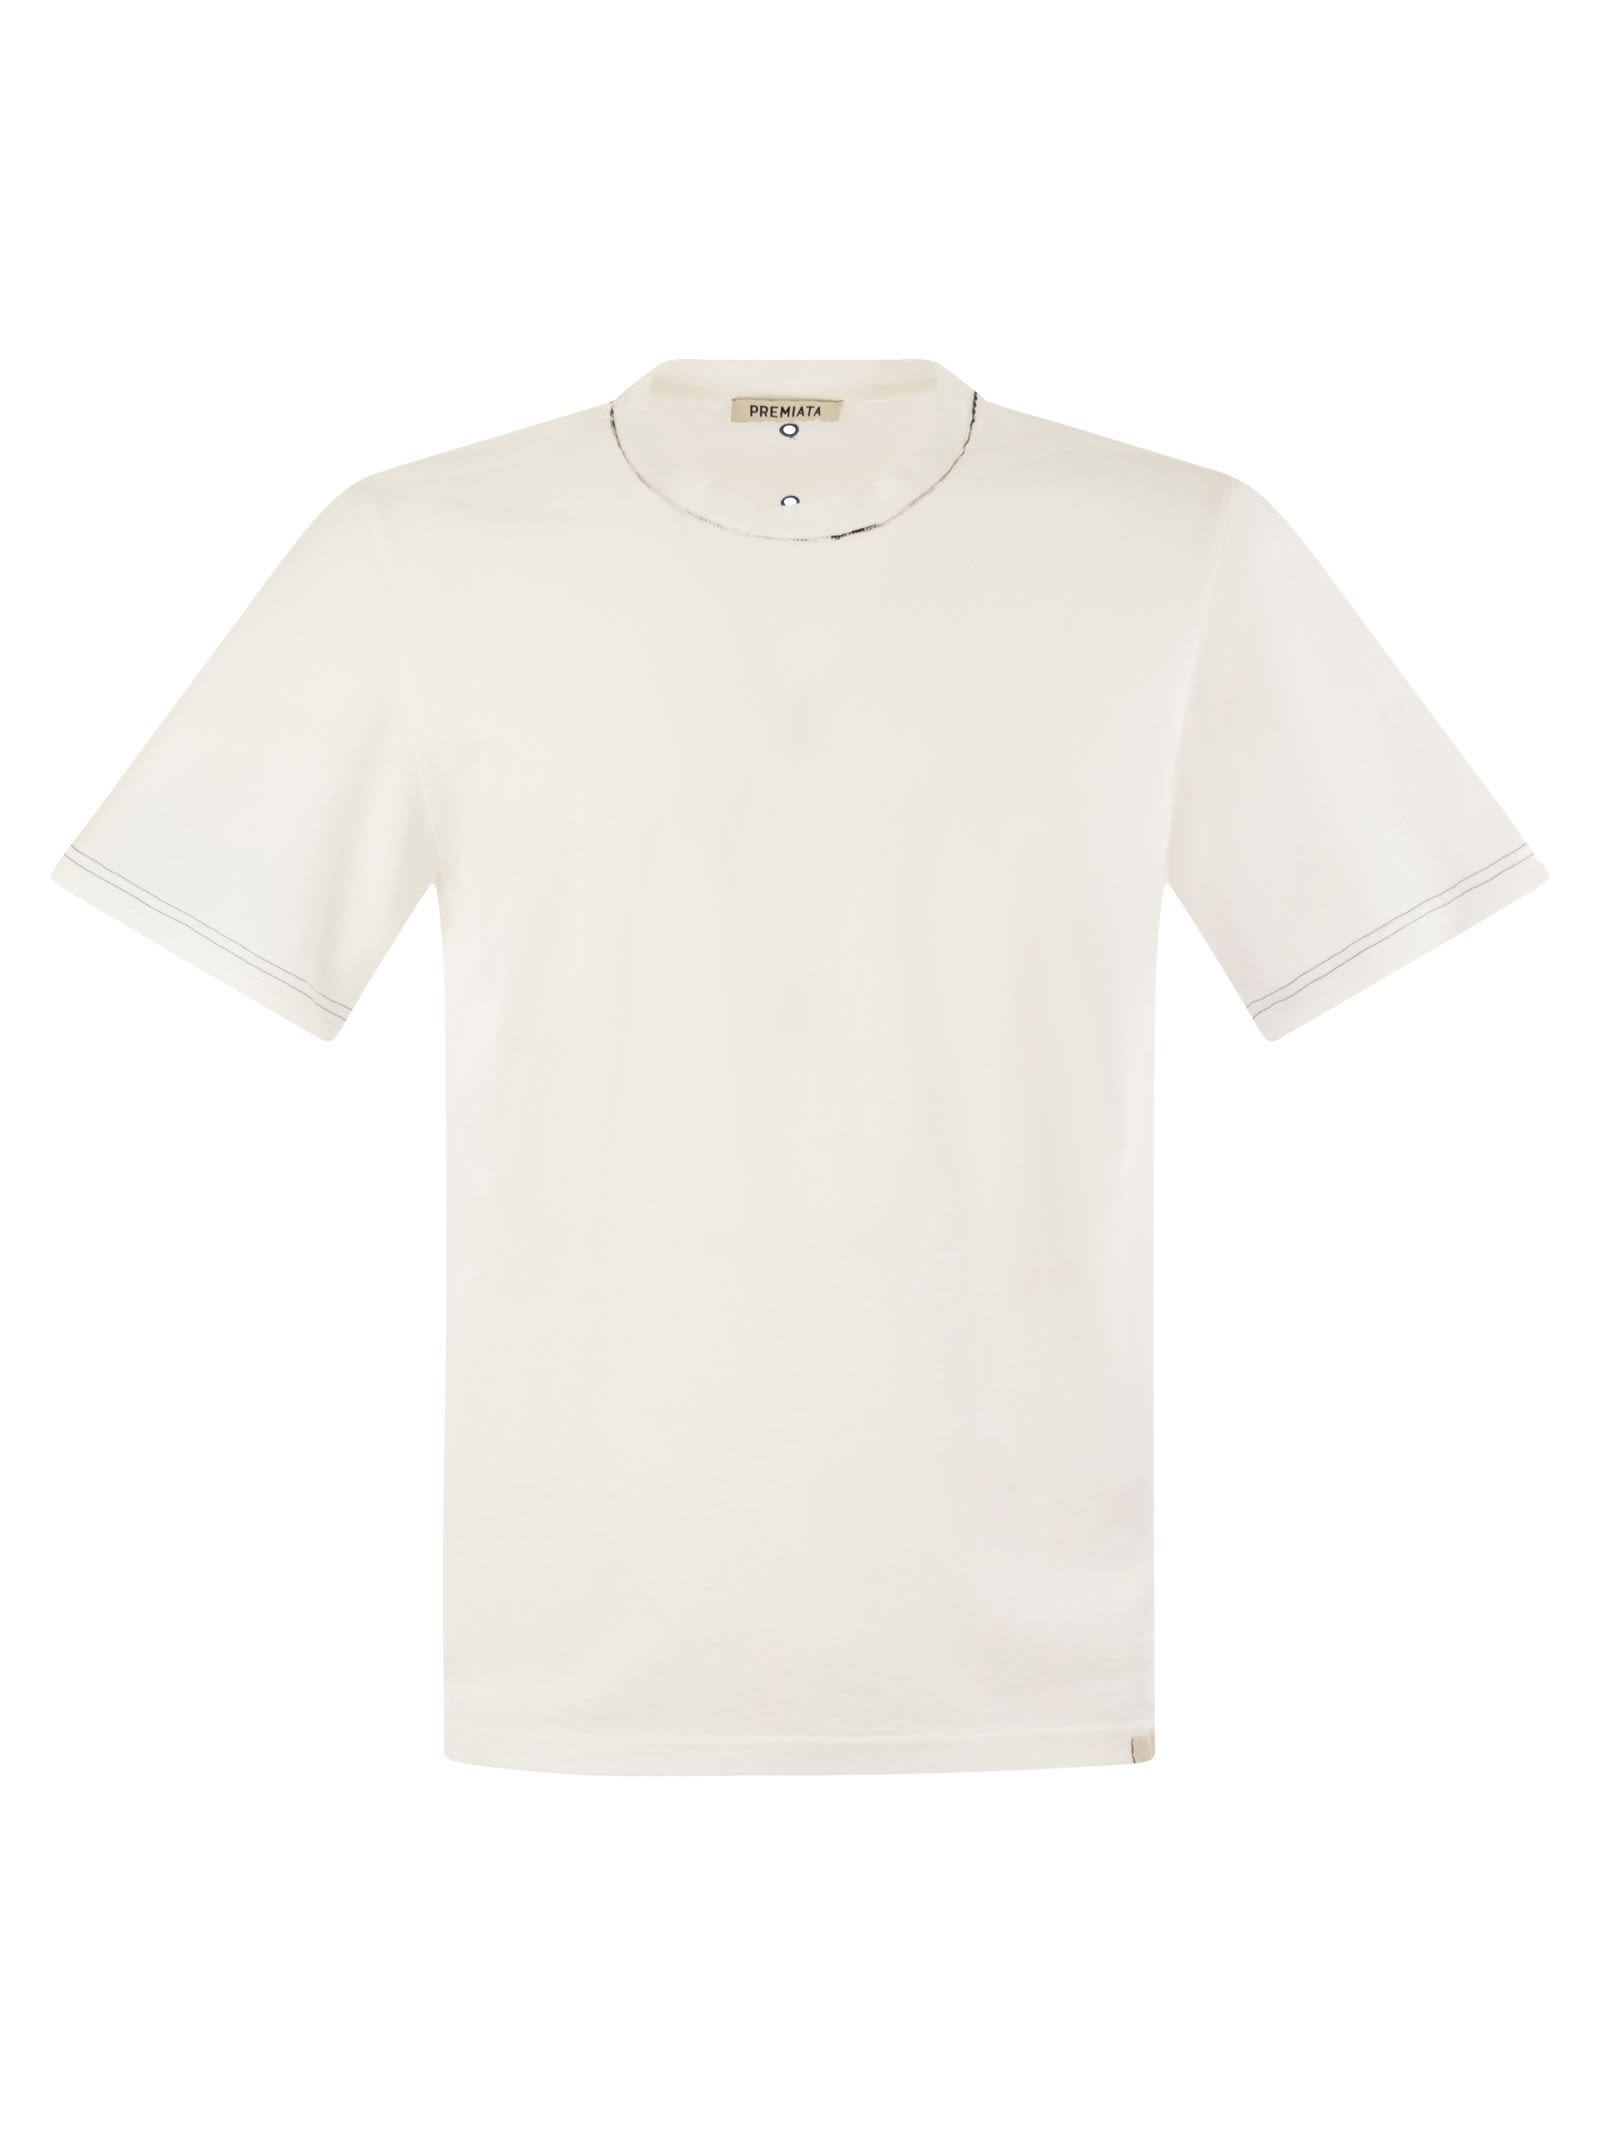 Premiata Short-sleeved Cotton T-shirt In White